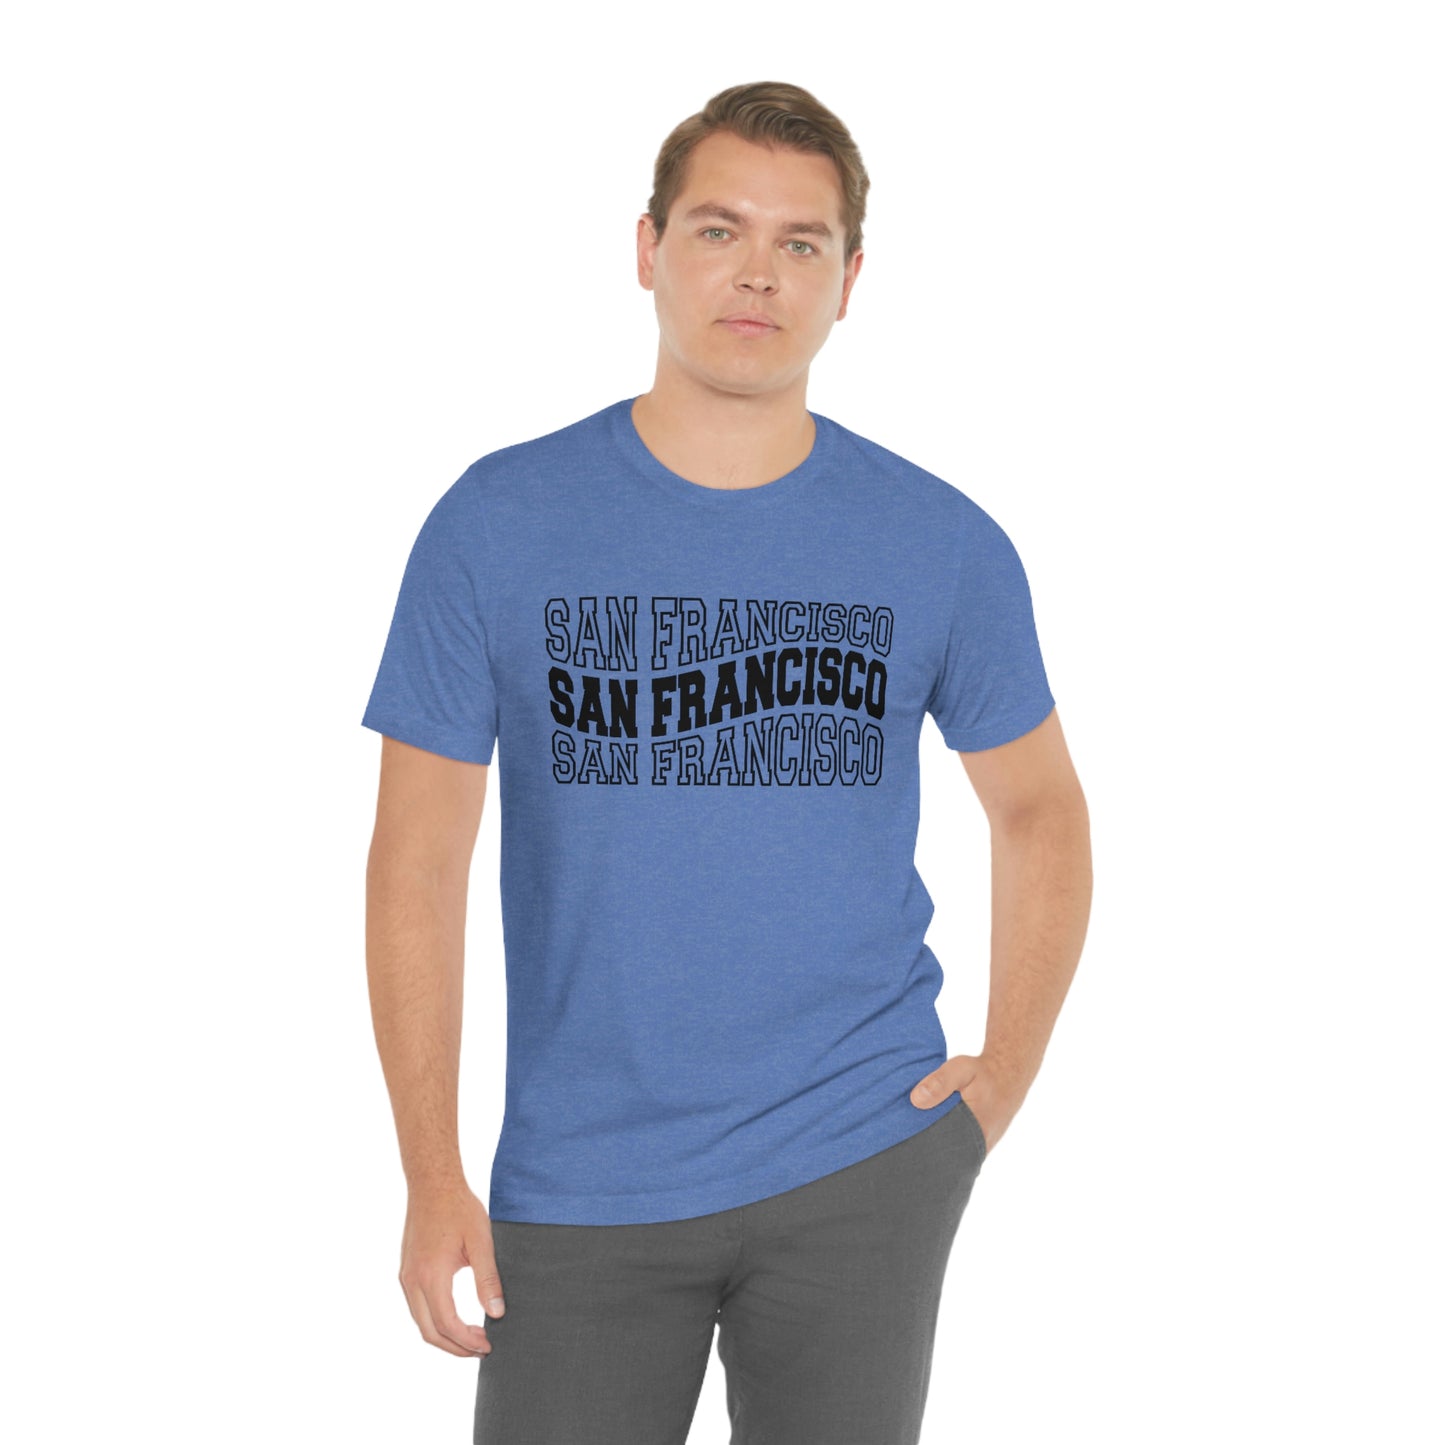 San Franciso California Varsity Letters Wavy Unisex Jersey Short Sleeve Tee Tshirt T-shirt